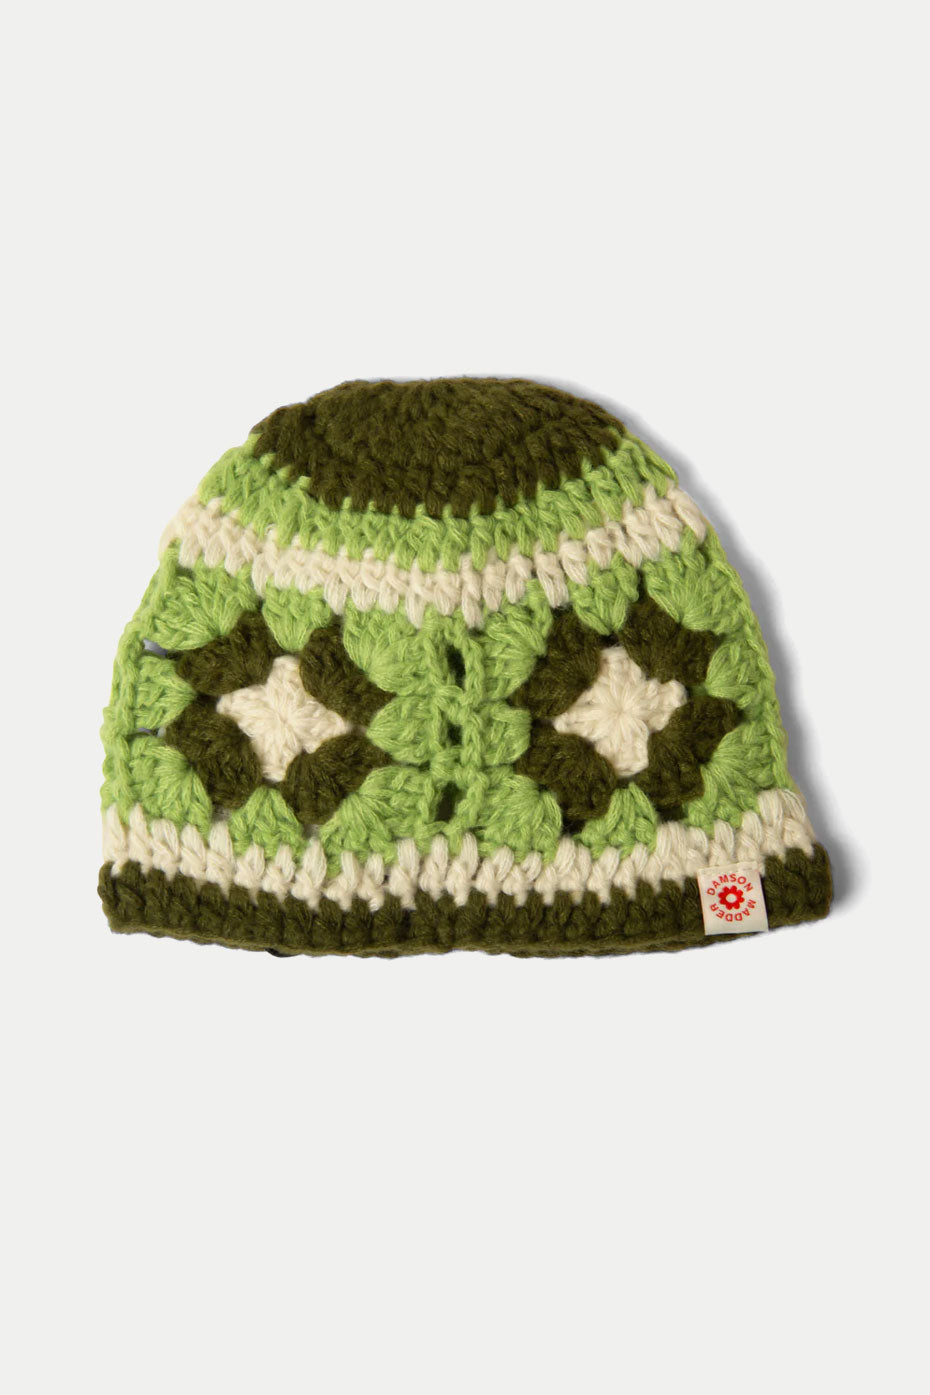 damson-madder-green-crochet-square-hat